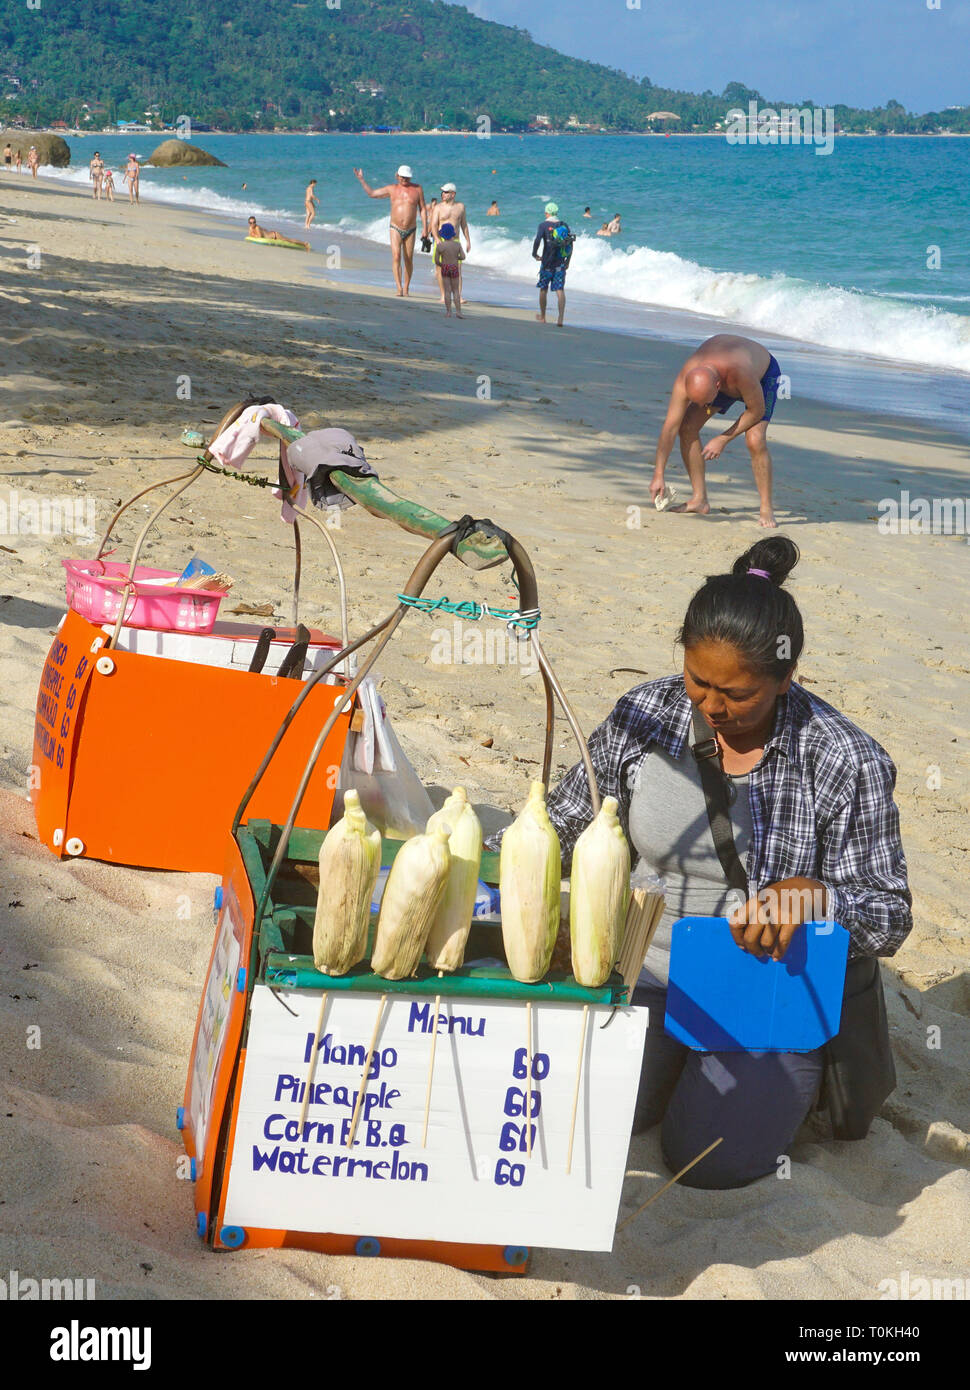 Strandverkäuferin am Lamai Strand, Koh Samui, Golf von Thailand, Thailand | Beach vendor at Lamai Beach, Koh Samui, Gulf of Thailand, Thailand Stock Photo